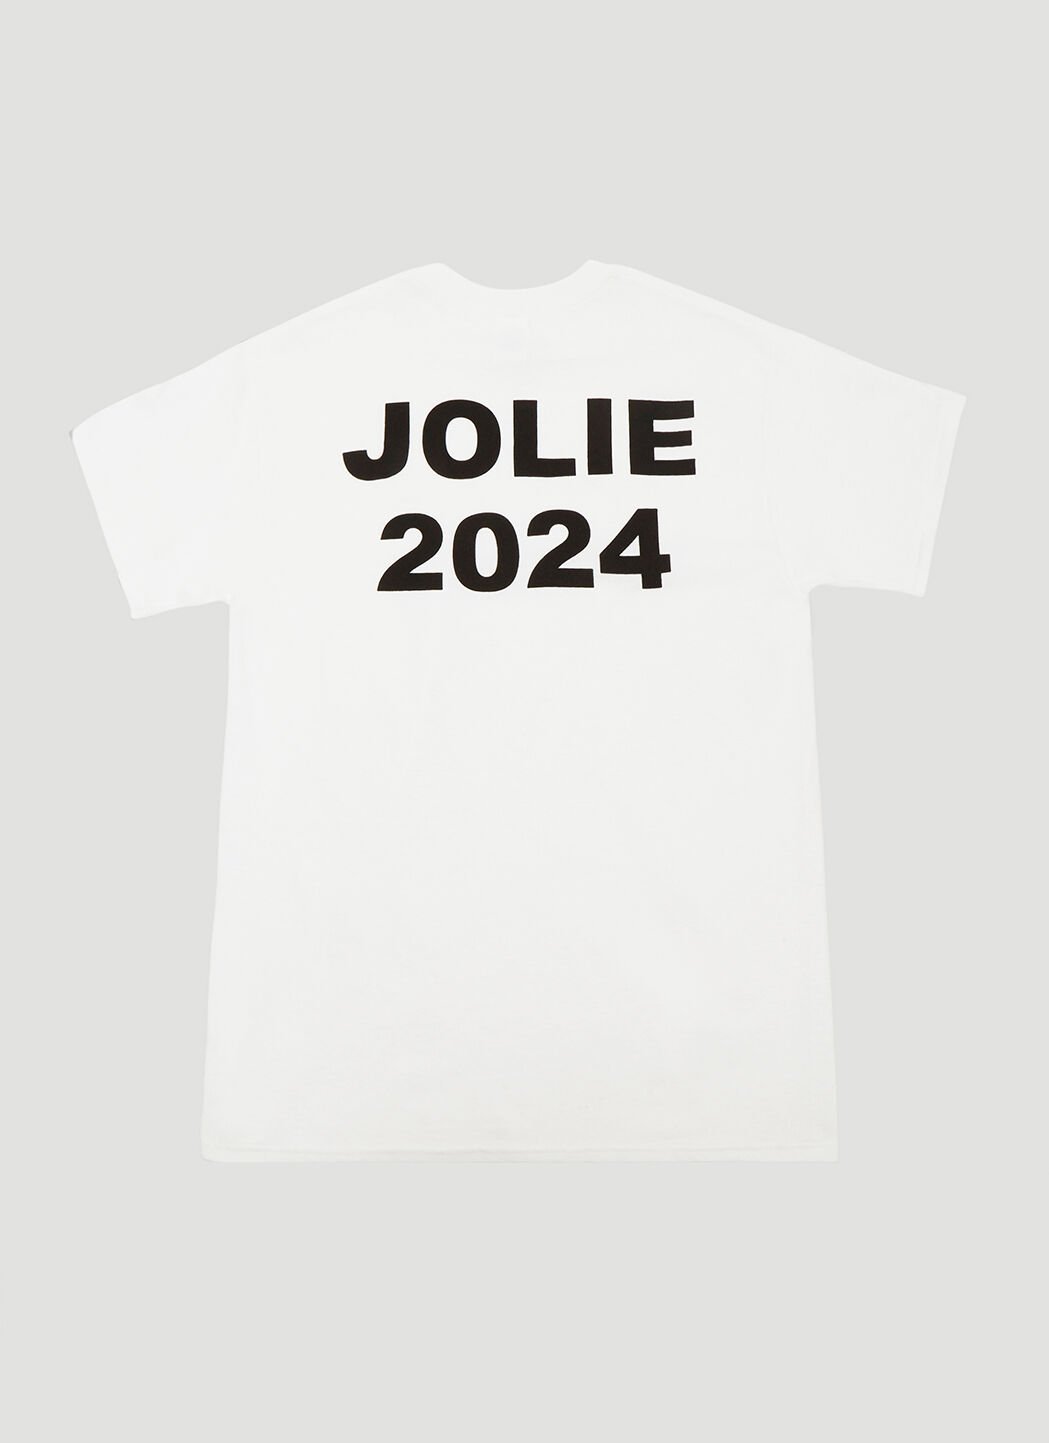 Gucci Article 1 Jolie 2024 T-Shirt Black guc0227007